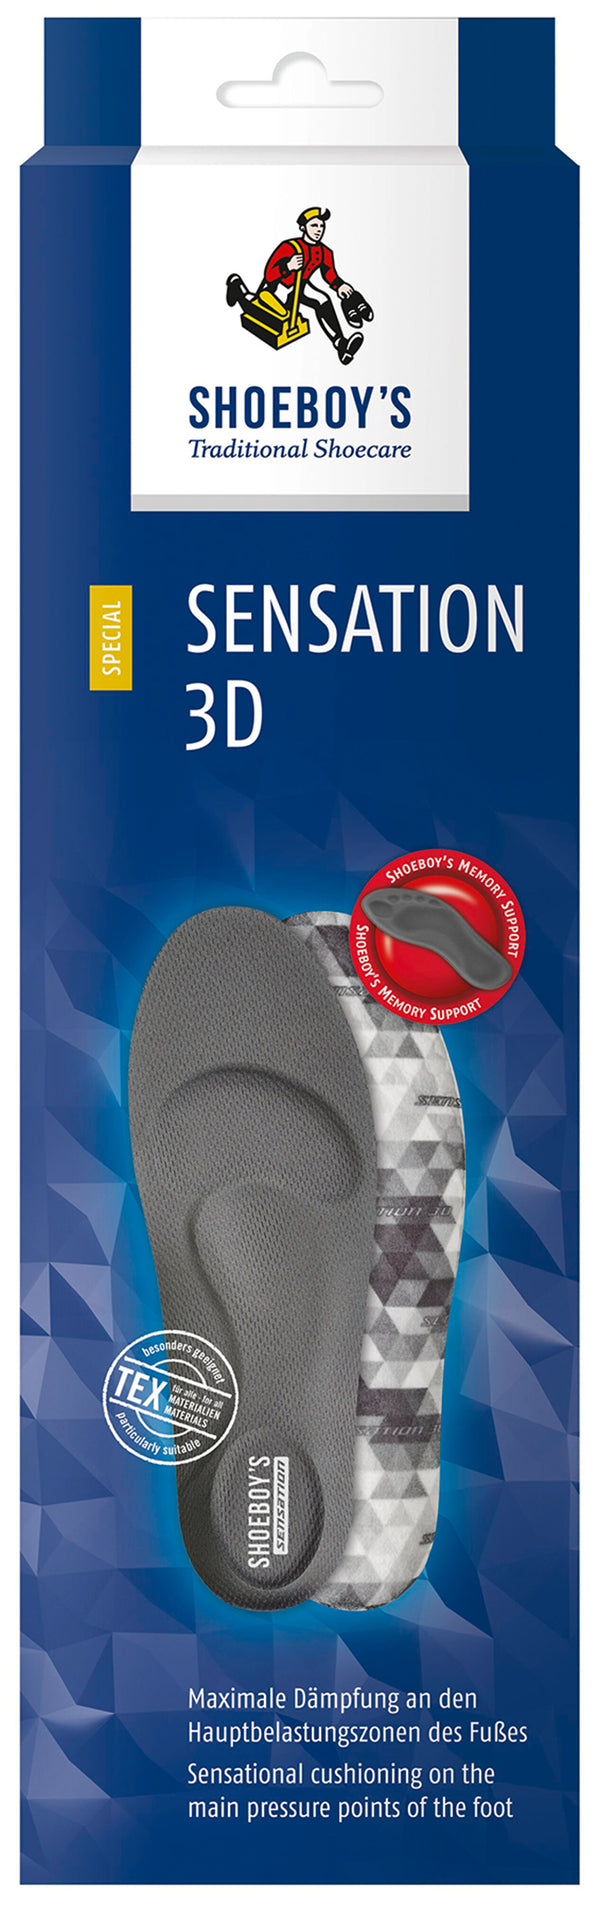 Shoeboy's Sensation 3D Insoles - Cushioning for Main Pressure Points, Stabilizes & Improves Flexing Dynamic - Trustables